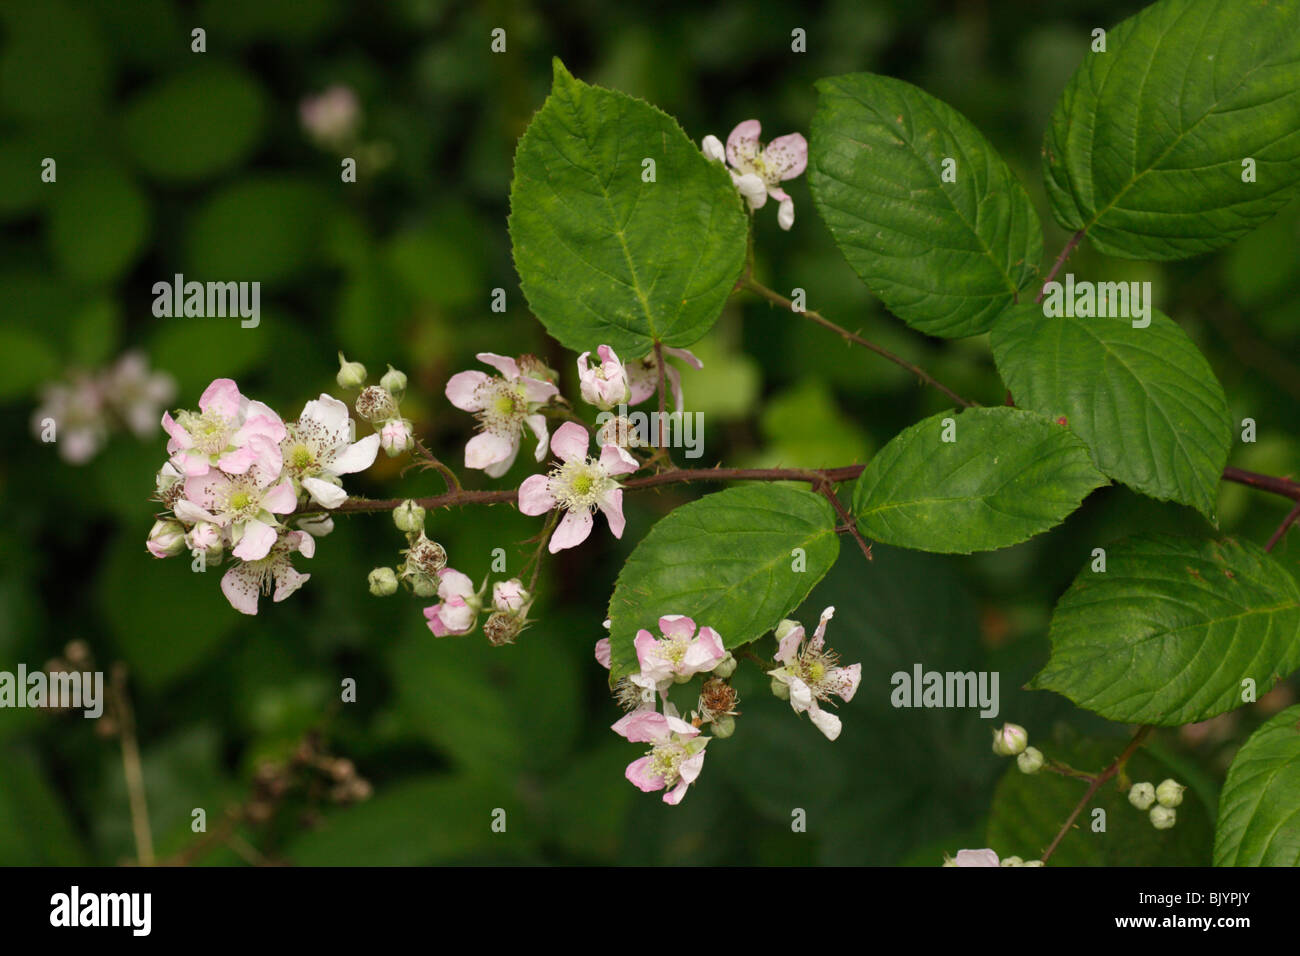 Flowers of Bramble or Blackberry Bush Stock Photo